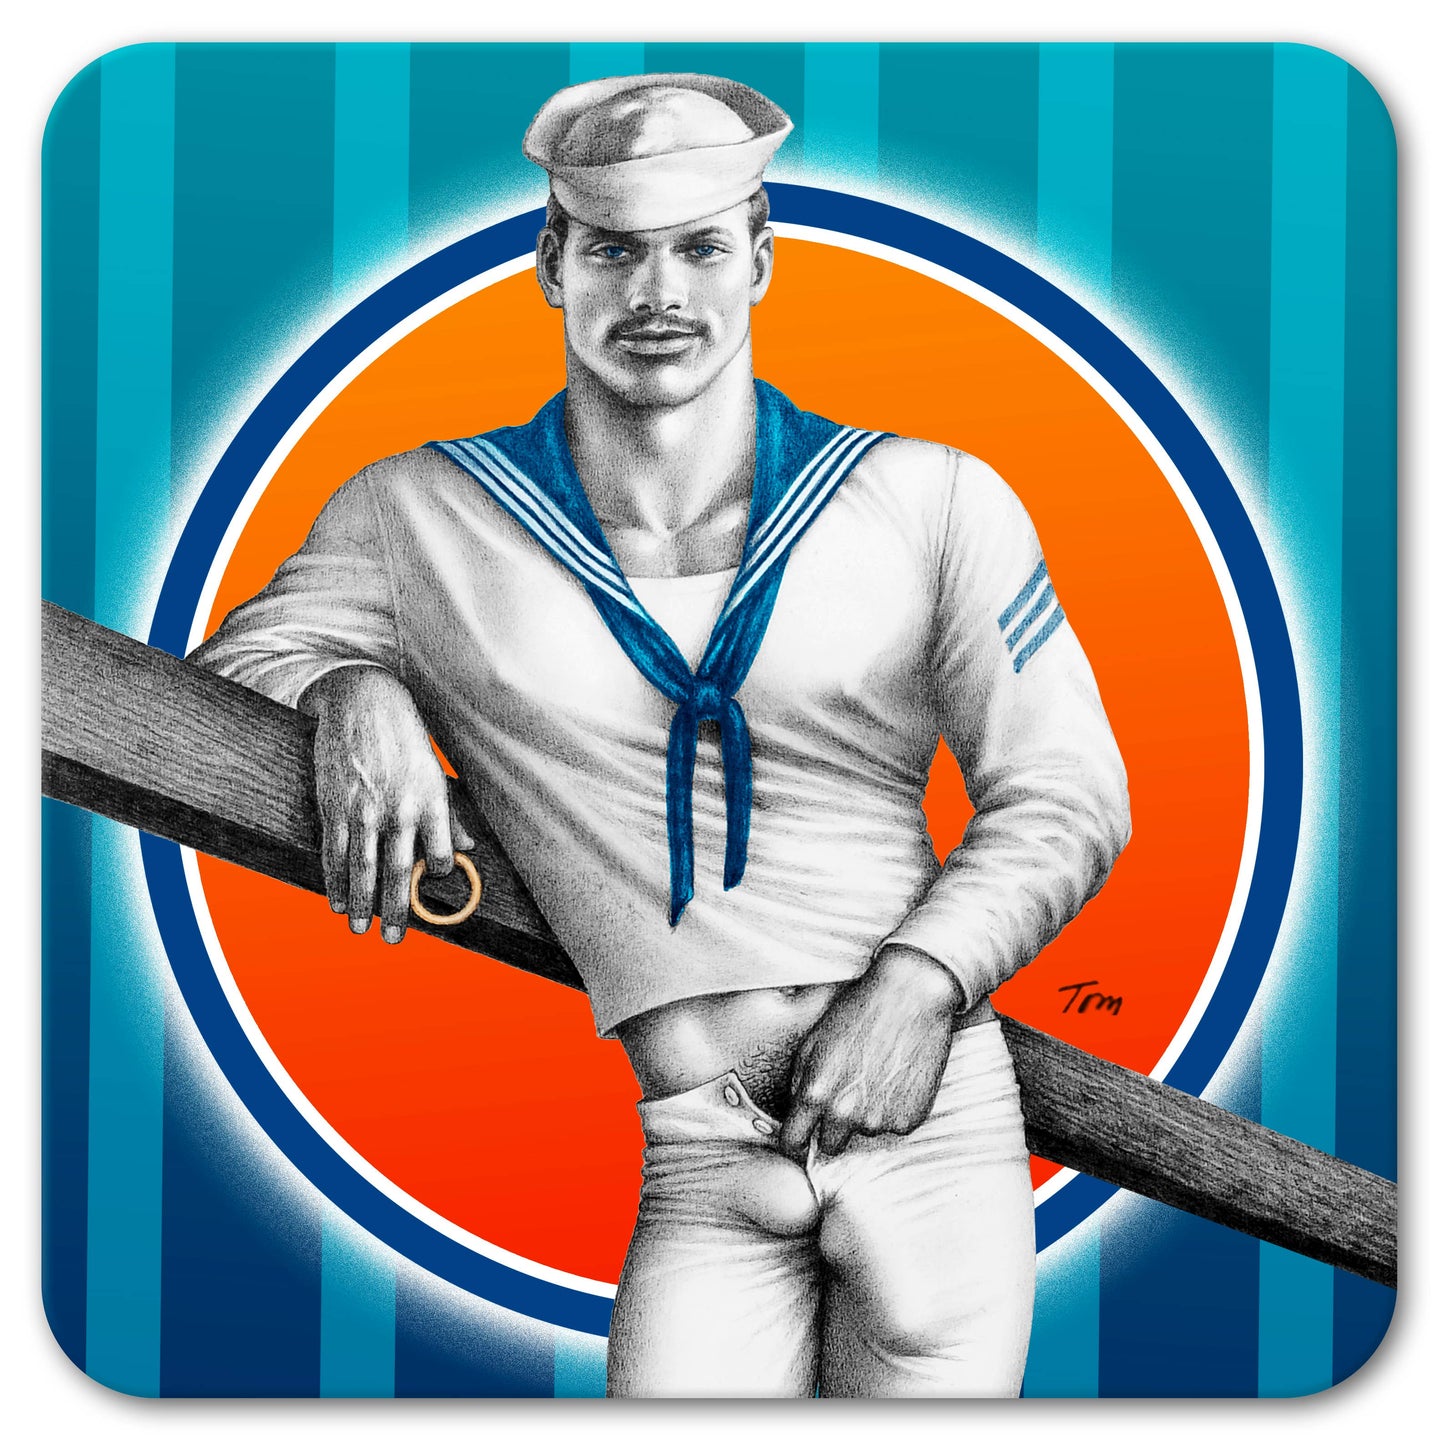 Tom of Finland "Salty Seaman" Coaster